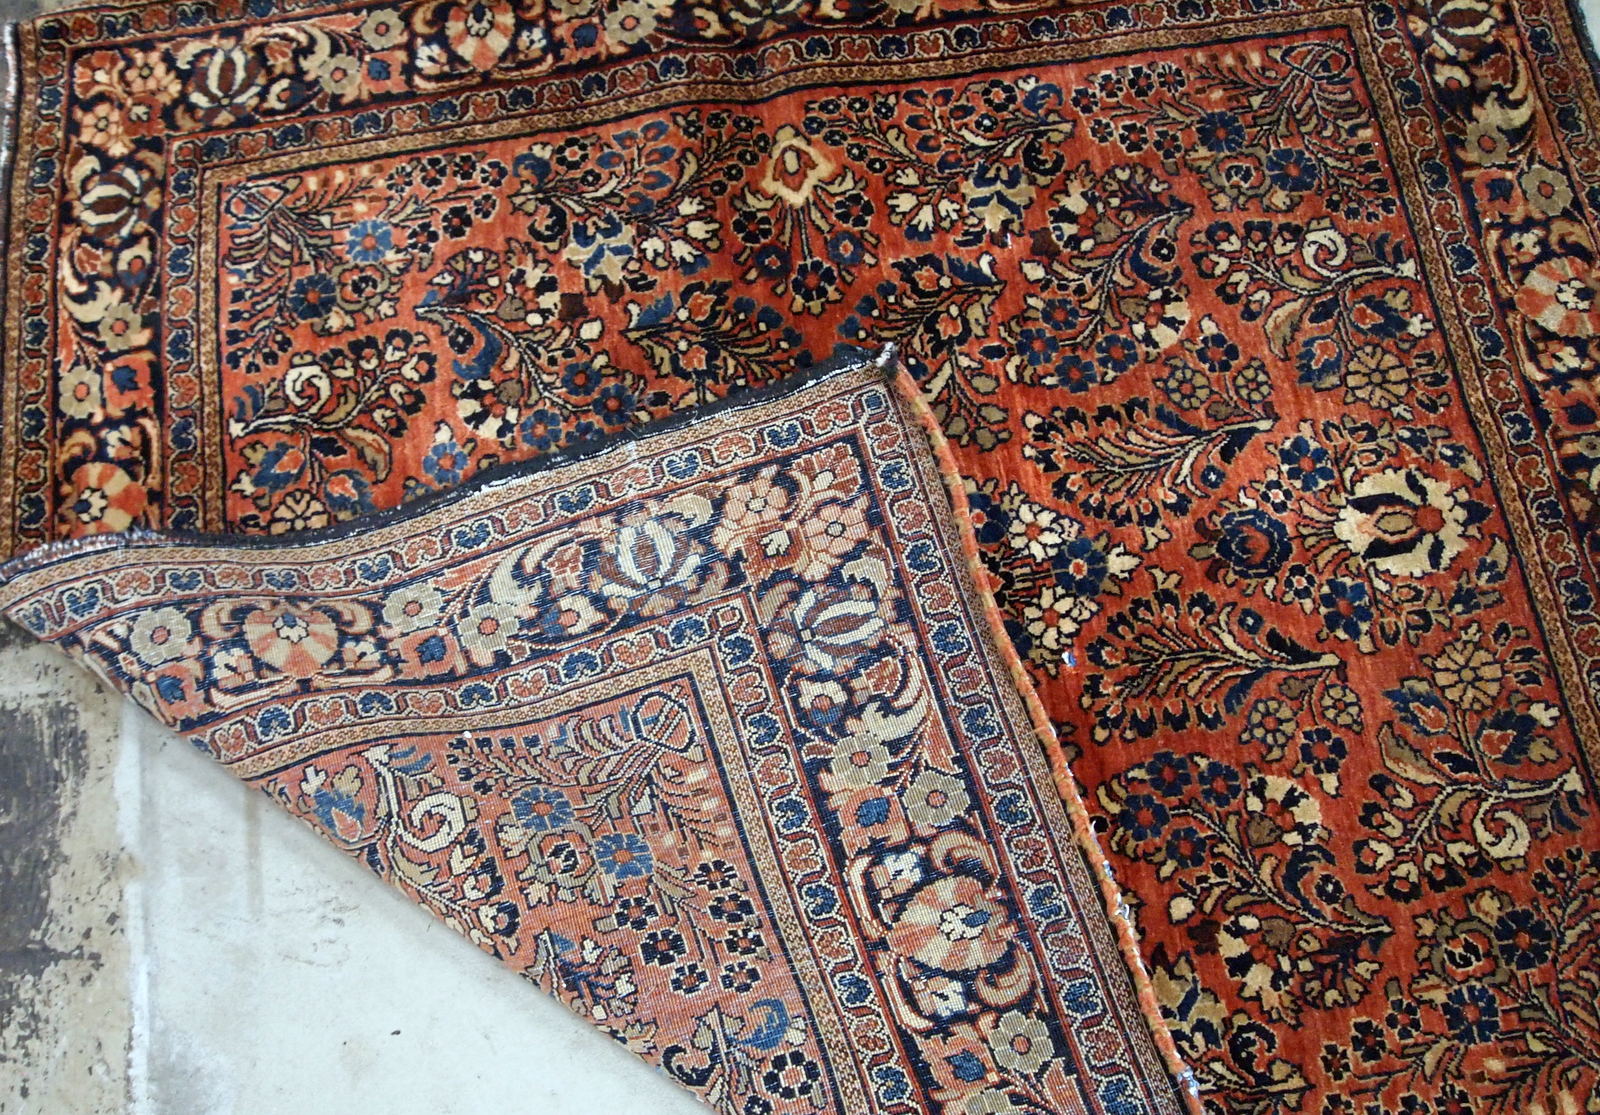 Handmade antique Persian Sarouk square rug 1920s